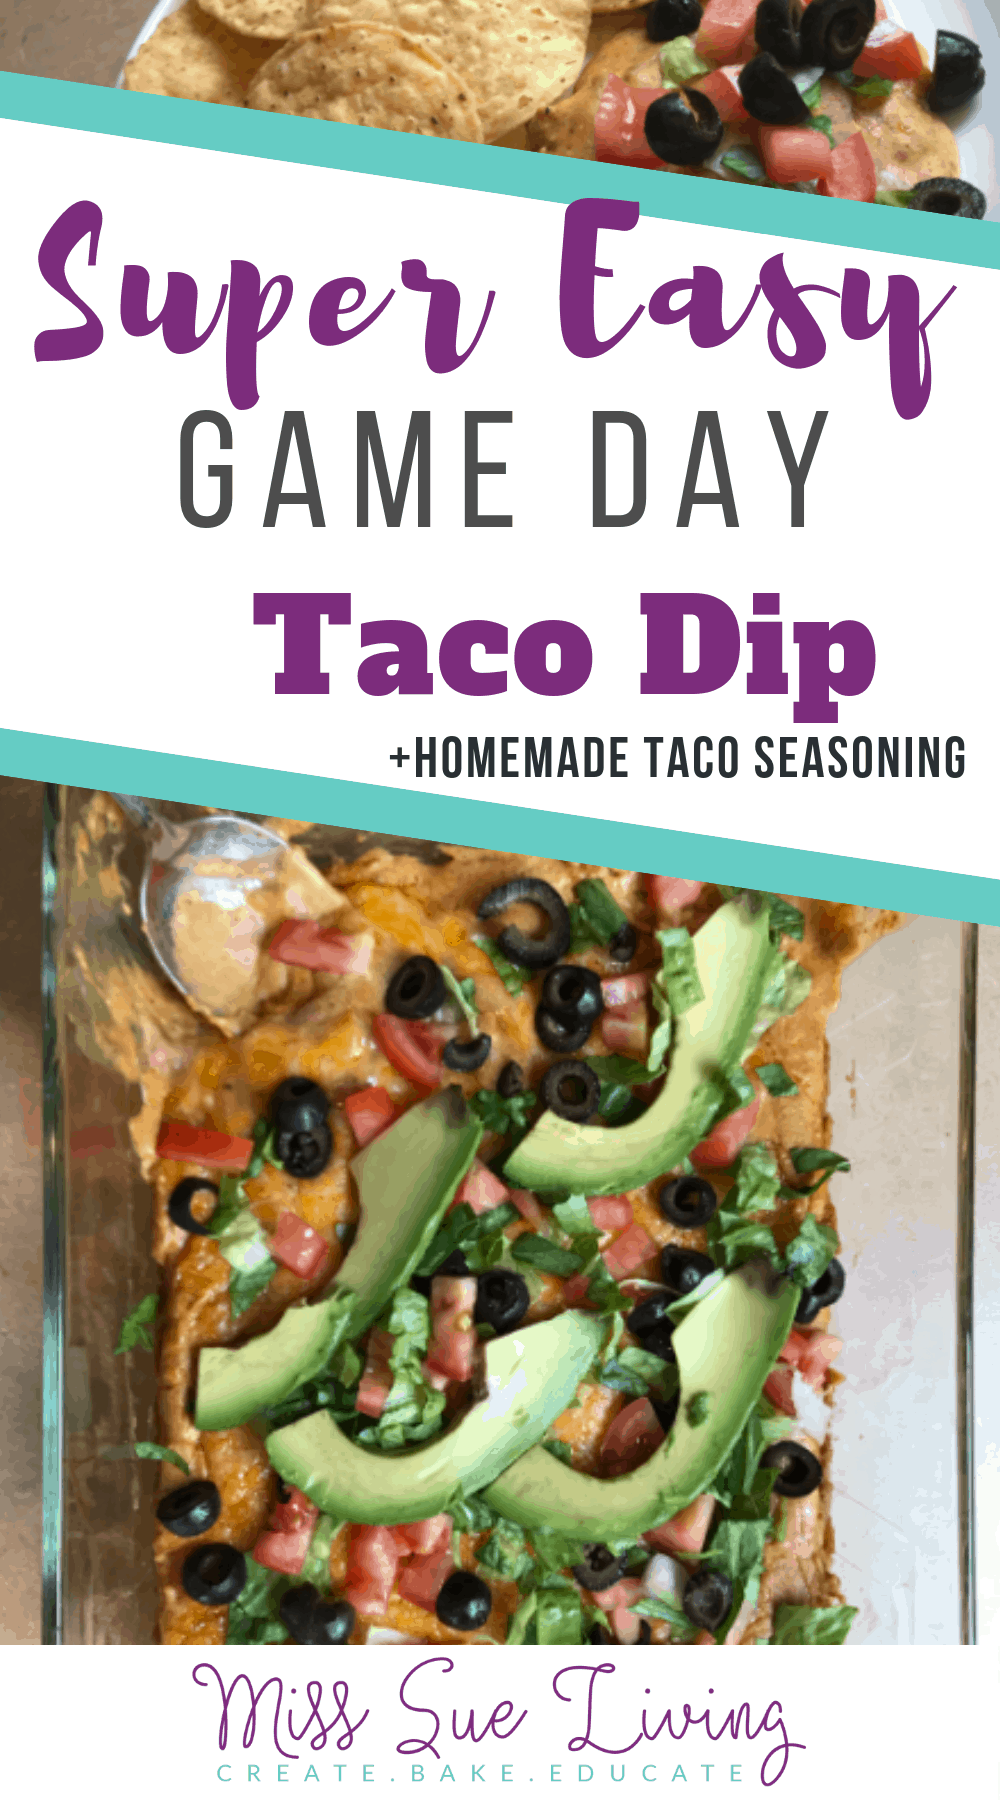 Super Easy Game Day Taco Dip With Homemade Taco Seasoning, game day taco dip, hot taco dip,taco dip, taco dip with cream cheese, best taco dip recipe, taco dip with sour cream, super bowl taco dip, taco dip easy, taco dip with refiried beans, touchdown taco dip, #tacodip #superbowlrecipes #gamedayrecipes #superbowl #gameday #touchdowntacodip